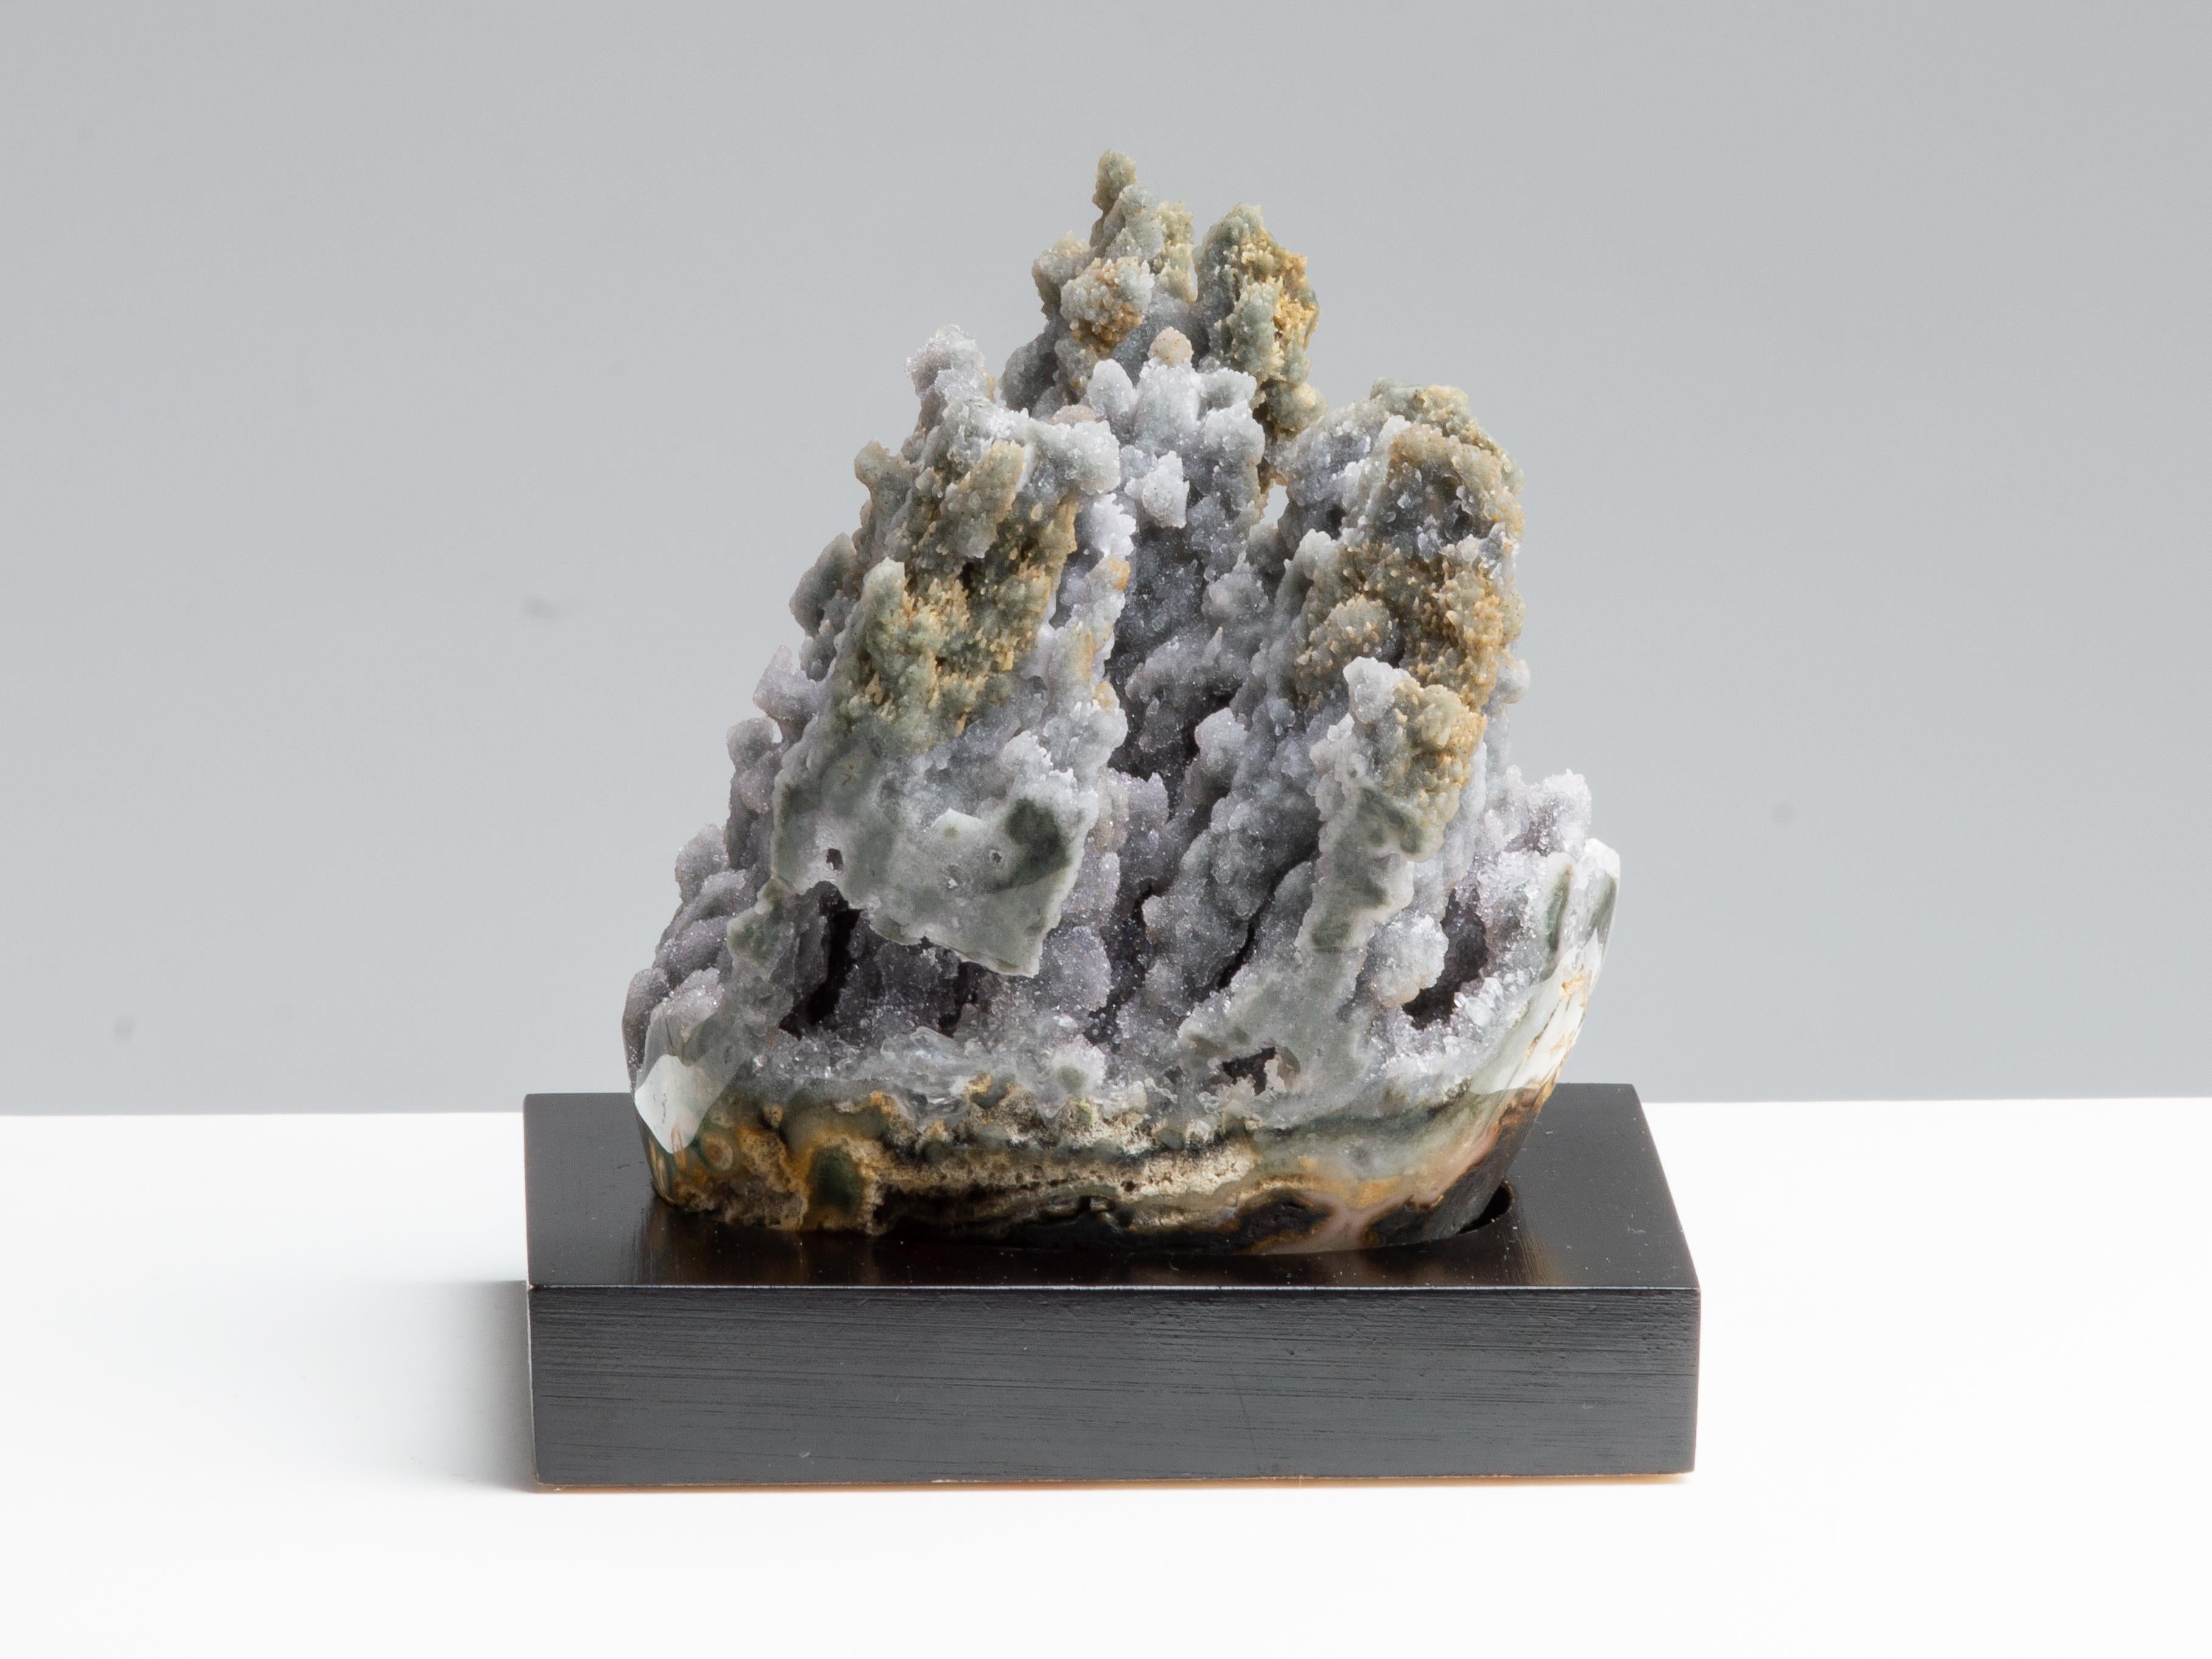 Uruguayan Rare Unusual Mineral Formation of Grey Druze and White Quartz For Sale